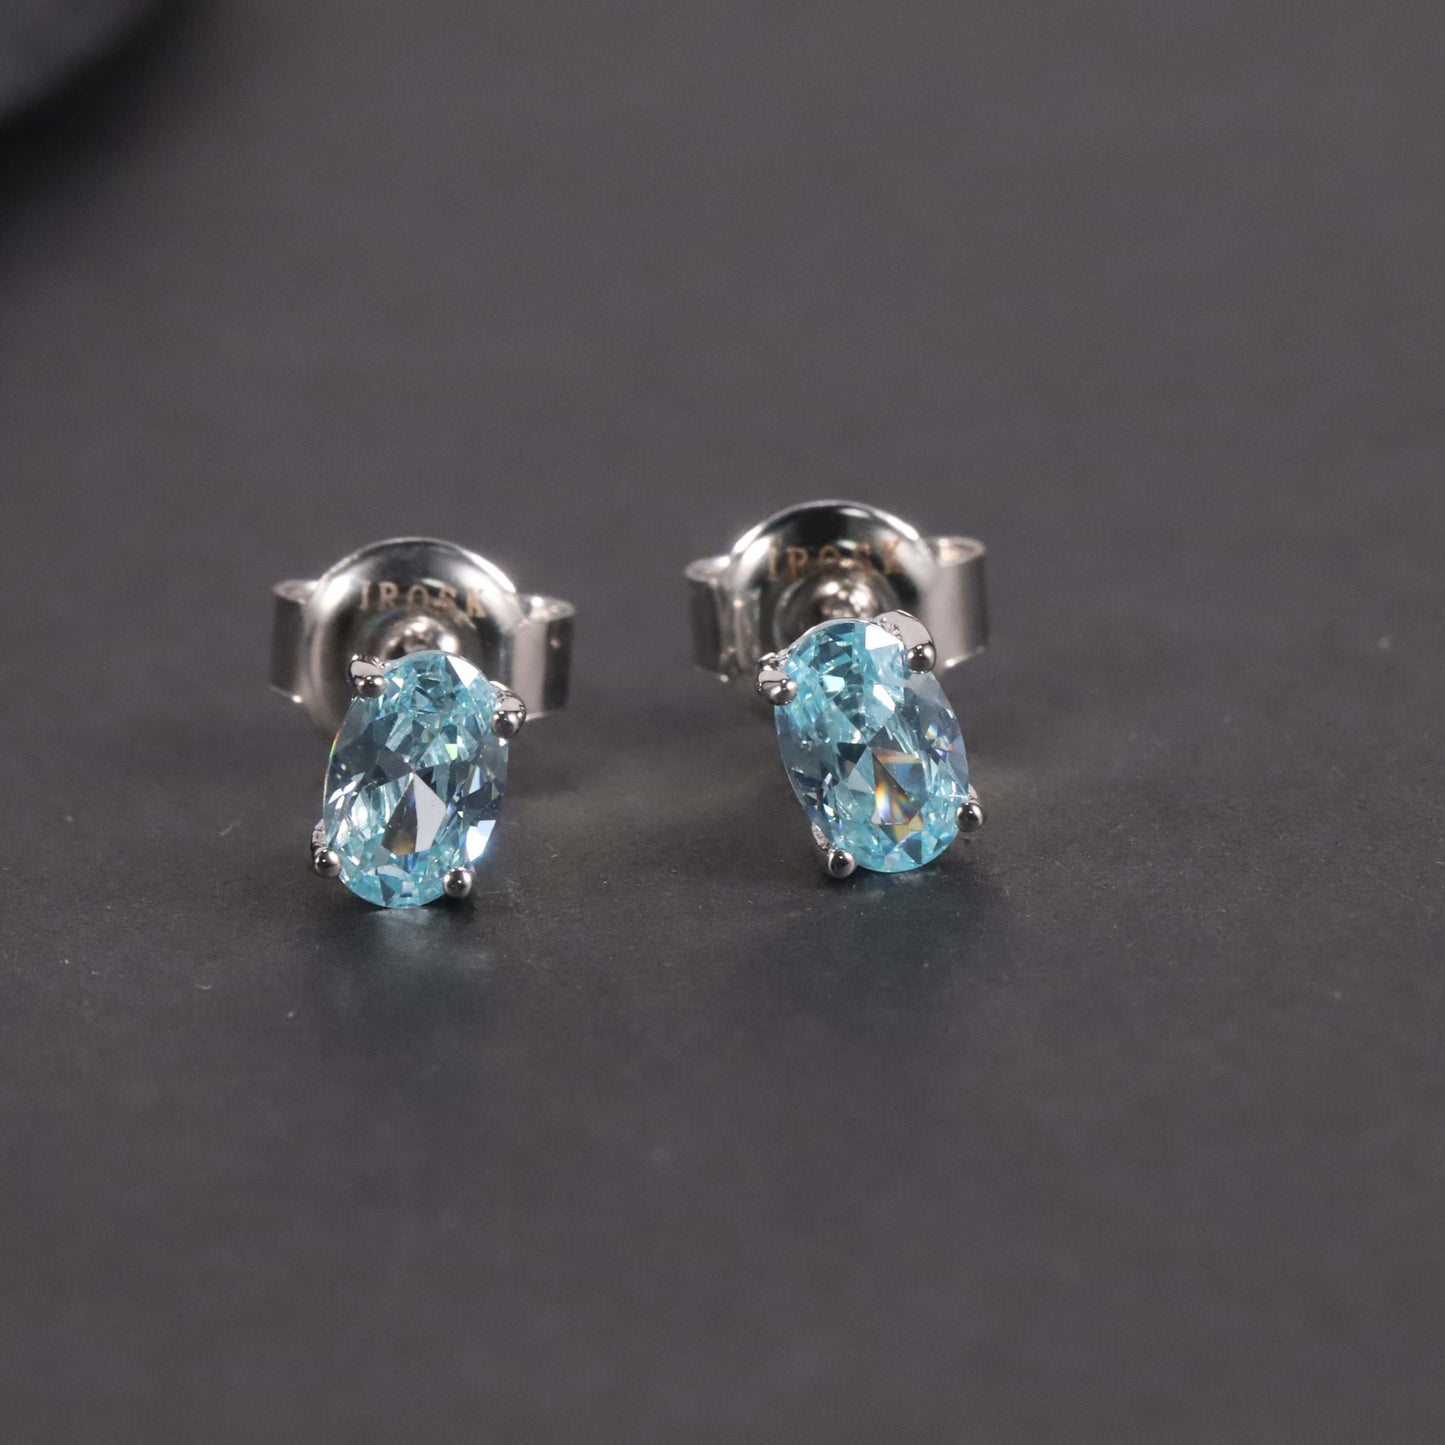 Oval Cut Stud Earrings in Sterling Silver -  Aquamarine